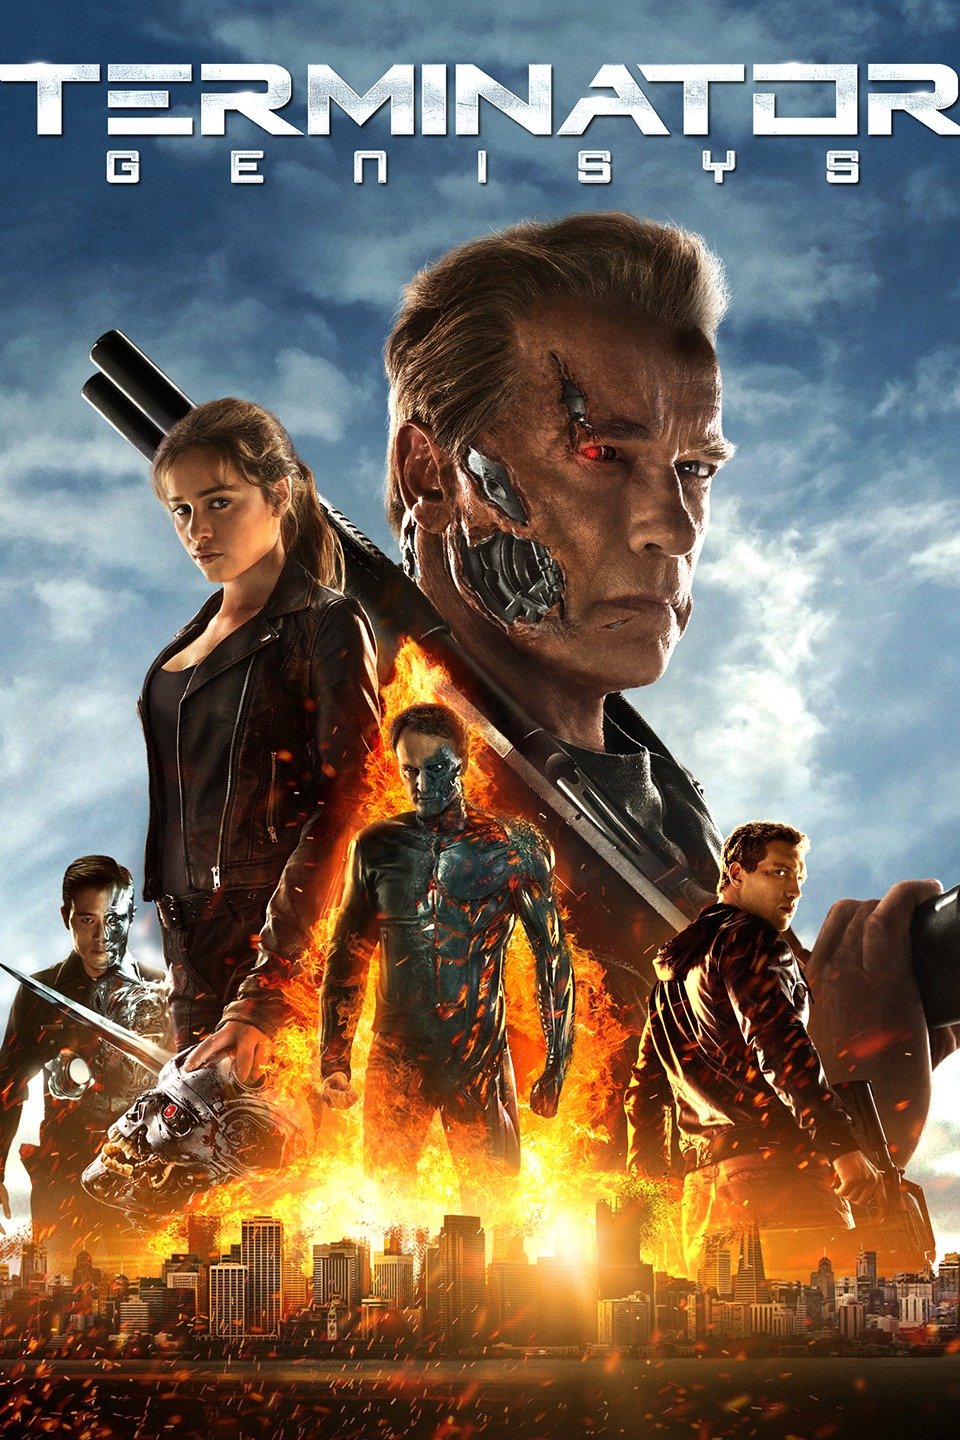 [MINI Super-HQ] Terminator Genisys (2015) ฅนเหล็ก 5 มหาวิบัติจักรกลยึดโลก [1080p] [เสียงไทย DTS + อังกฤษ DTS] [BluRay.DTS.x264] [บรรยายไทย + อังกฤษ] [เสียงไทย + ซับไทย]